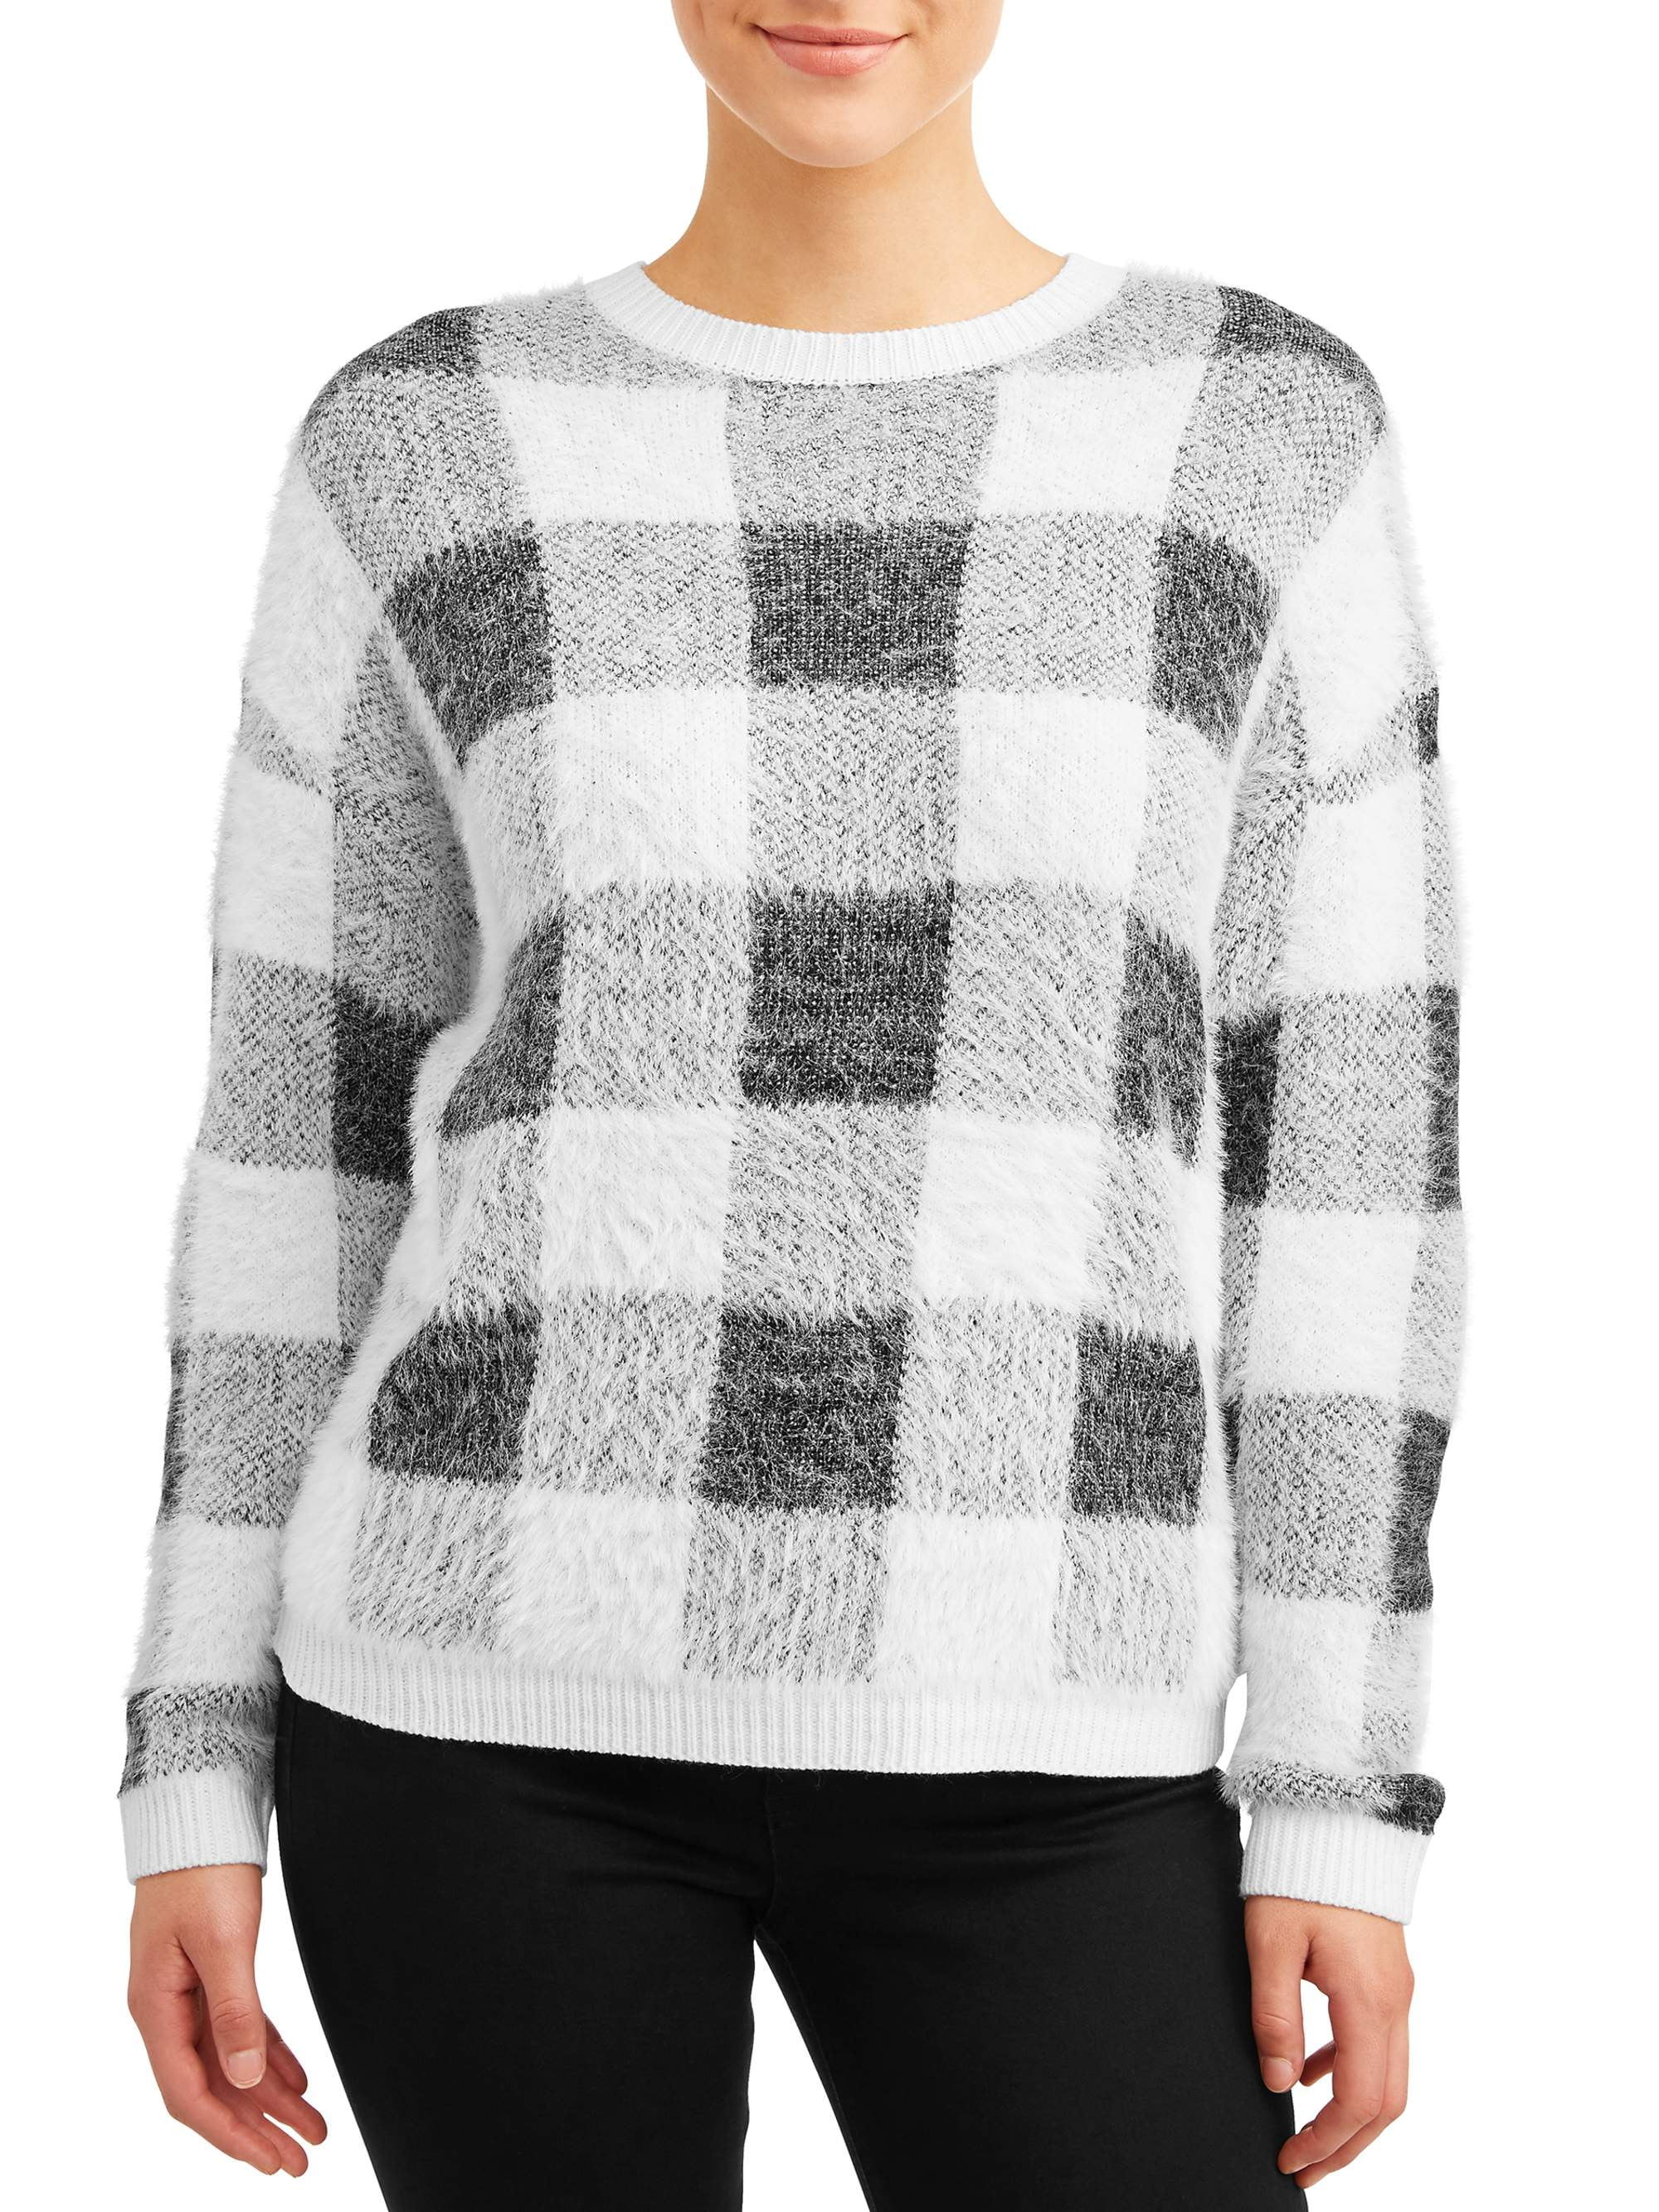 Girls Eyelash Knitted Jumper Kids Pullover Sweater Fluffy Lurex Stripe Top 